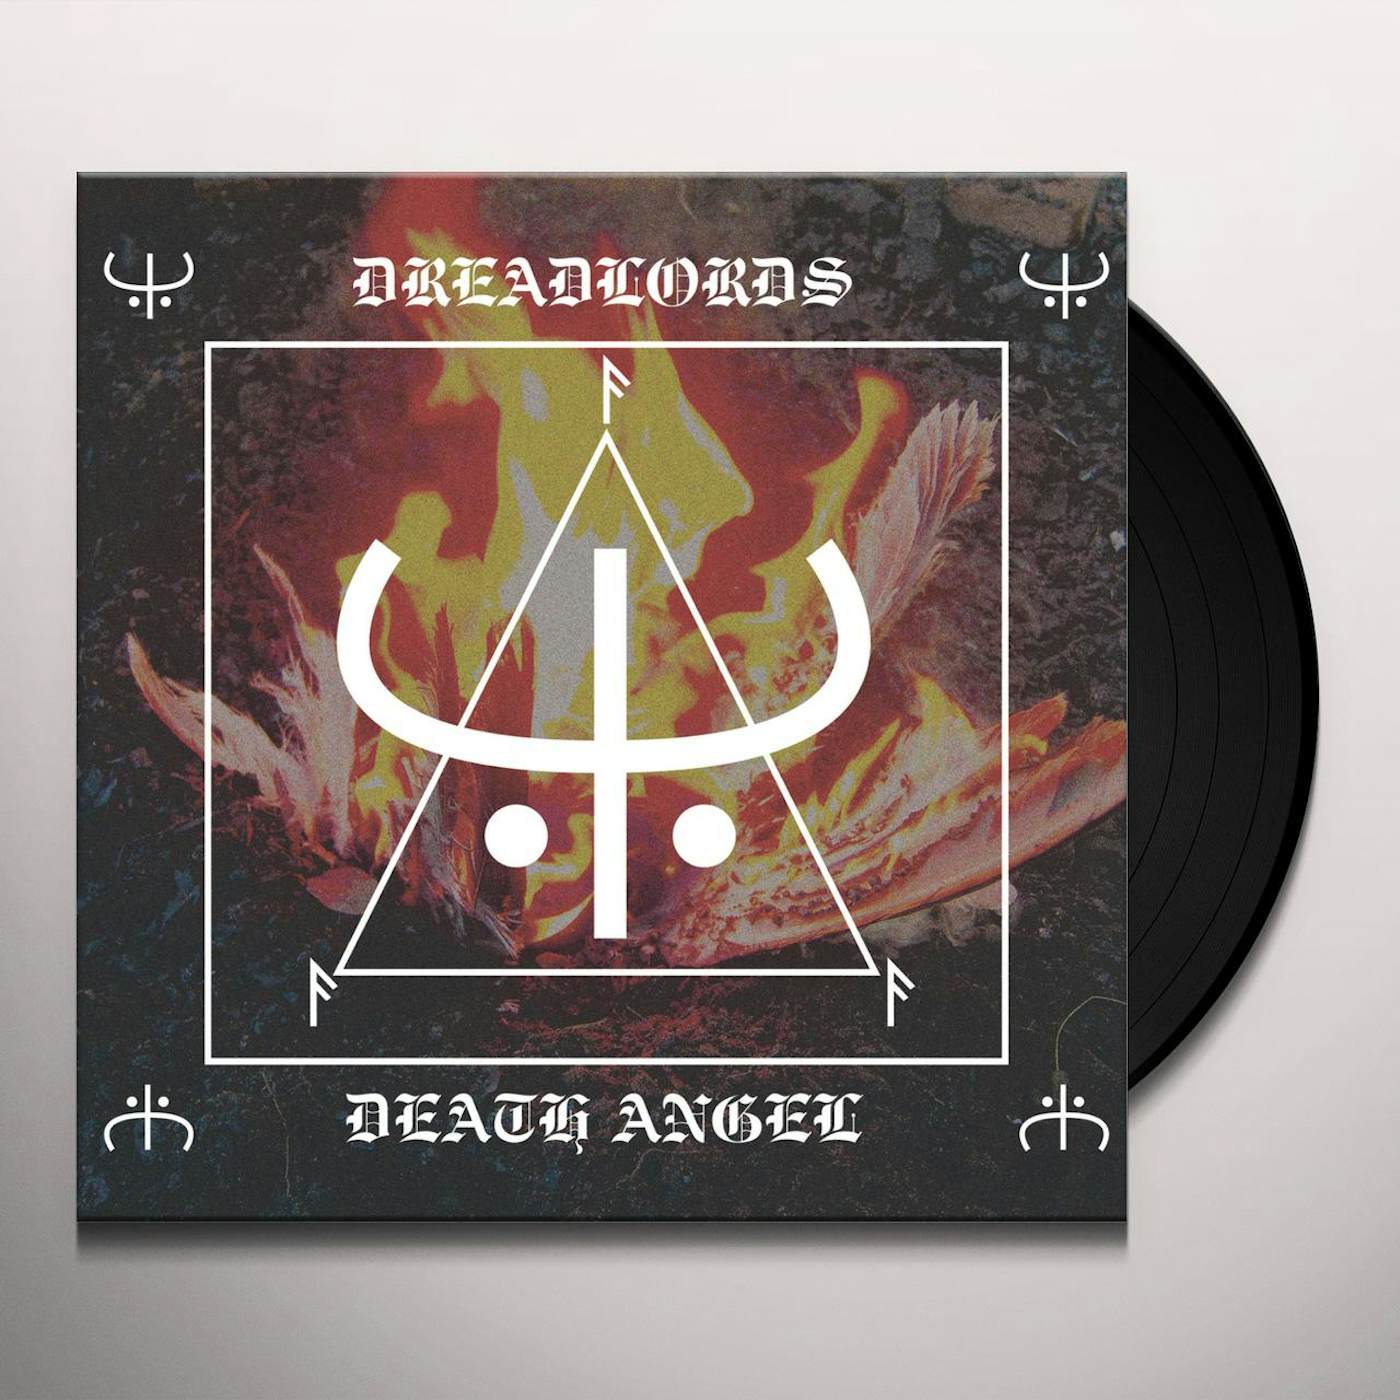 Dreadlords Death Angel Vinyl Record